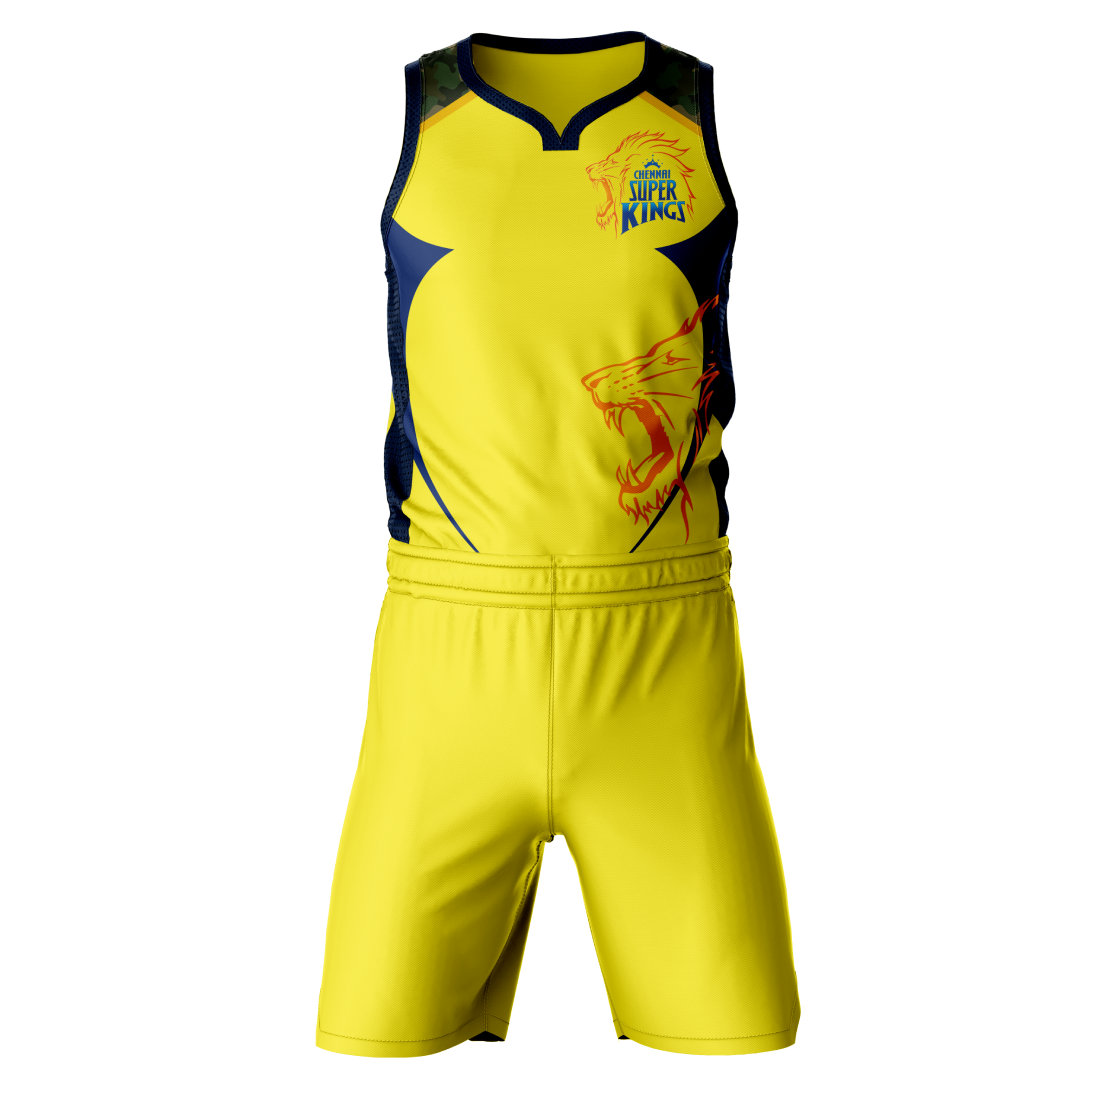 Next Print Ipl Chennai Design Basketball Jersey With Shorts